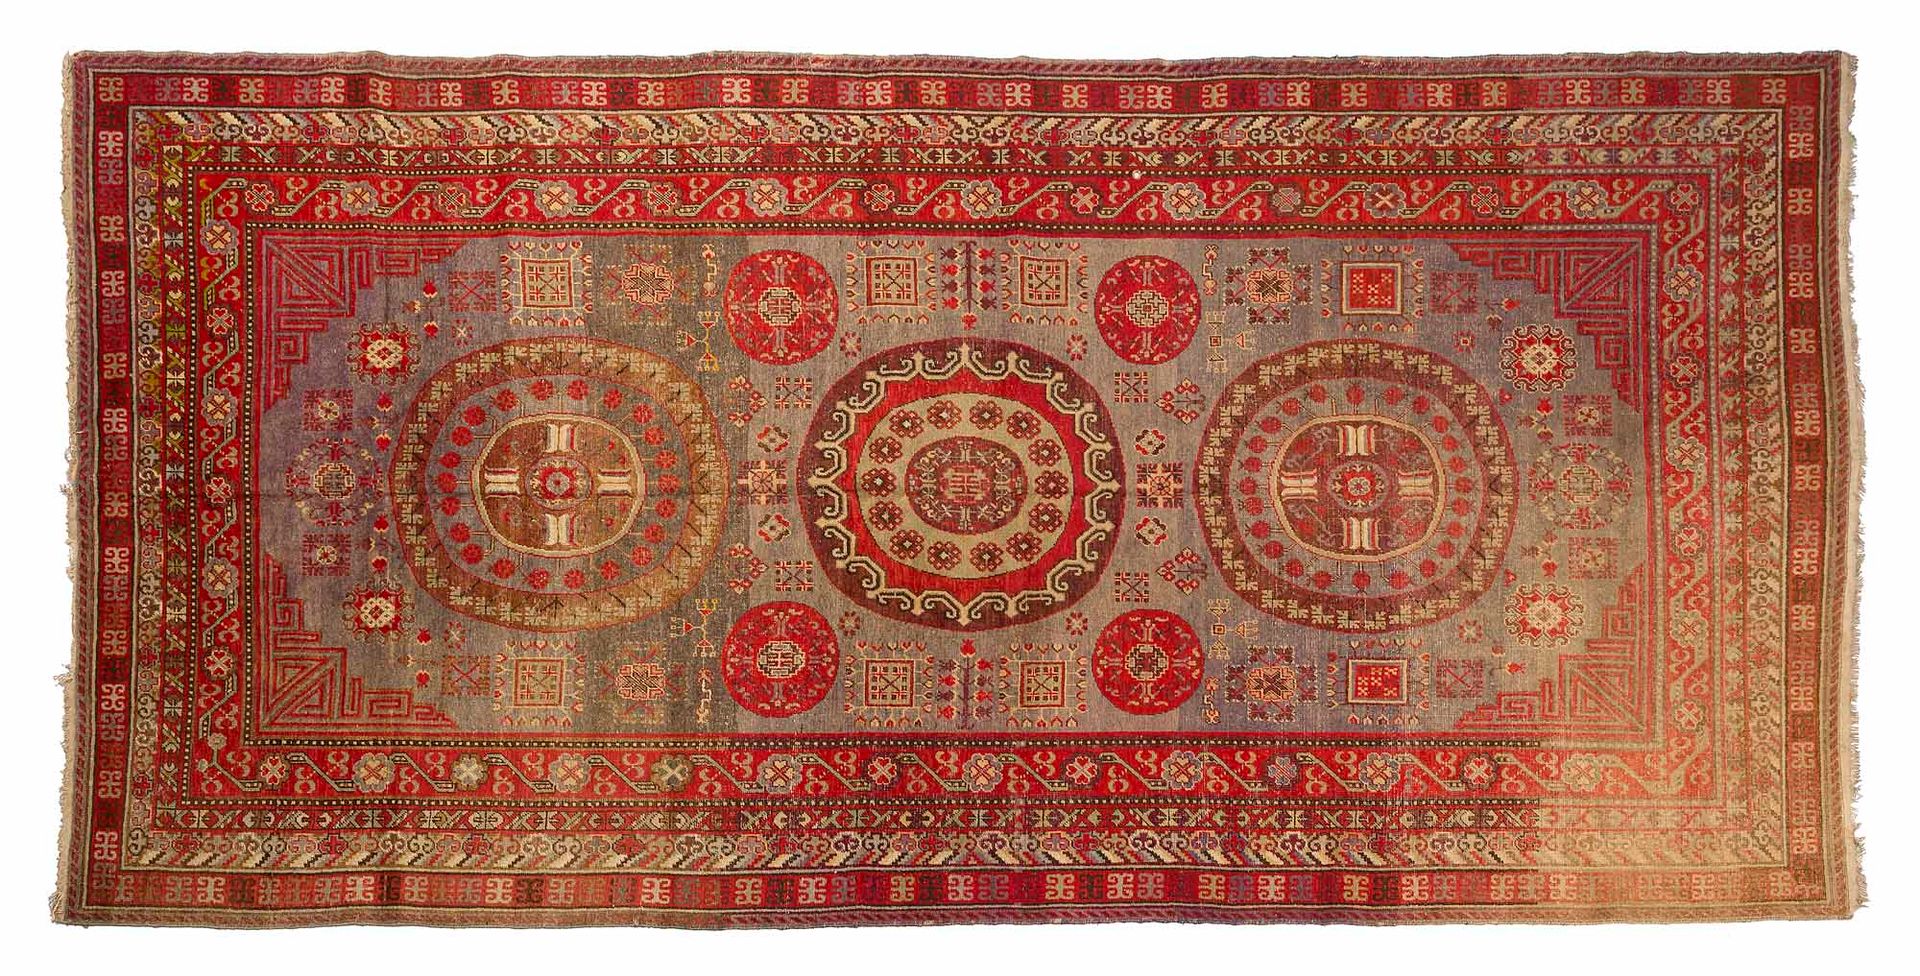 Tapis SAMARKANDE (Asie Centrale), fin du 19e siècle 
Dimensions : 410 x 210cm. 
&hellip;